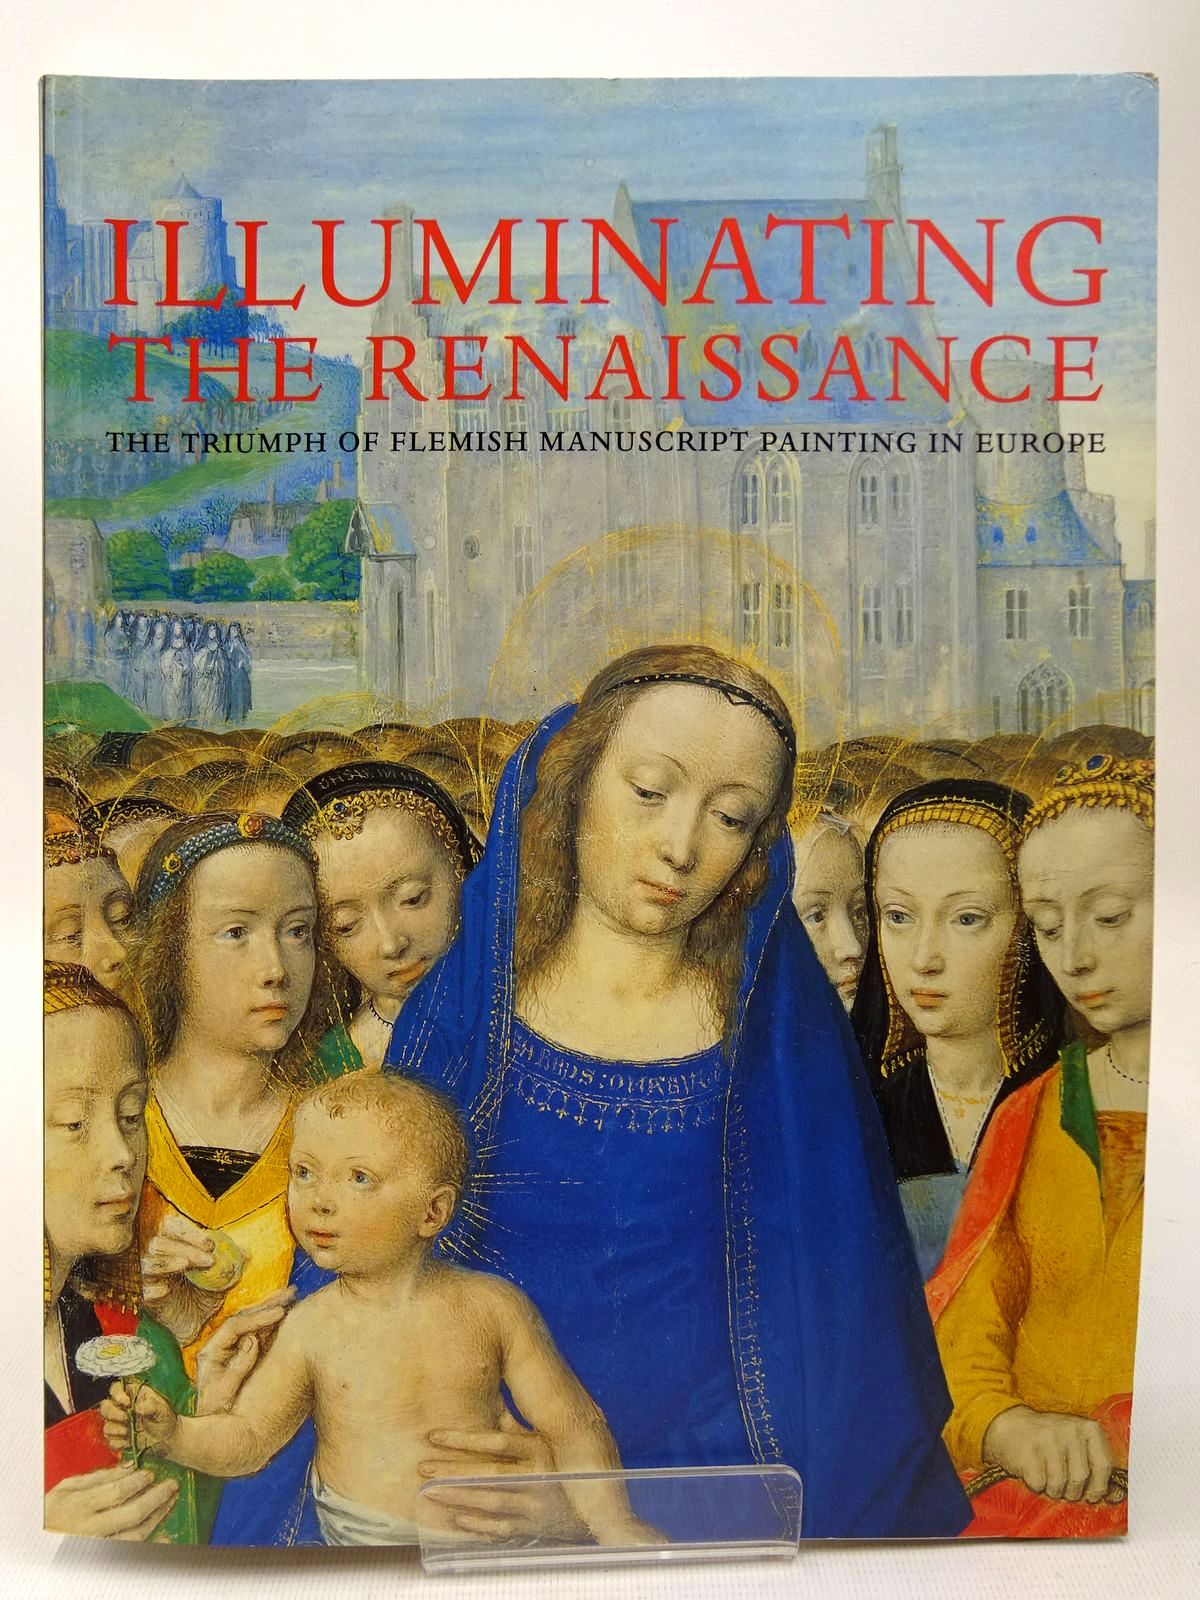 The Renaissance The Triumph Of Flemish Manuscript Painting In Europe